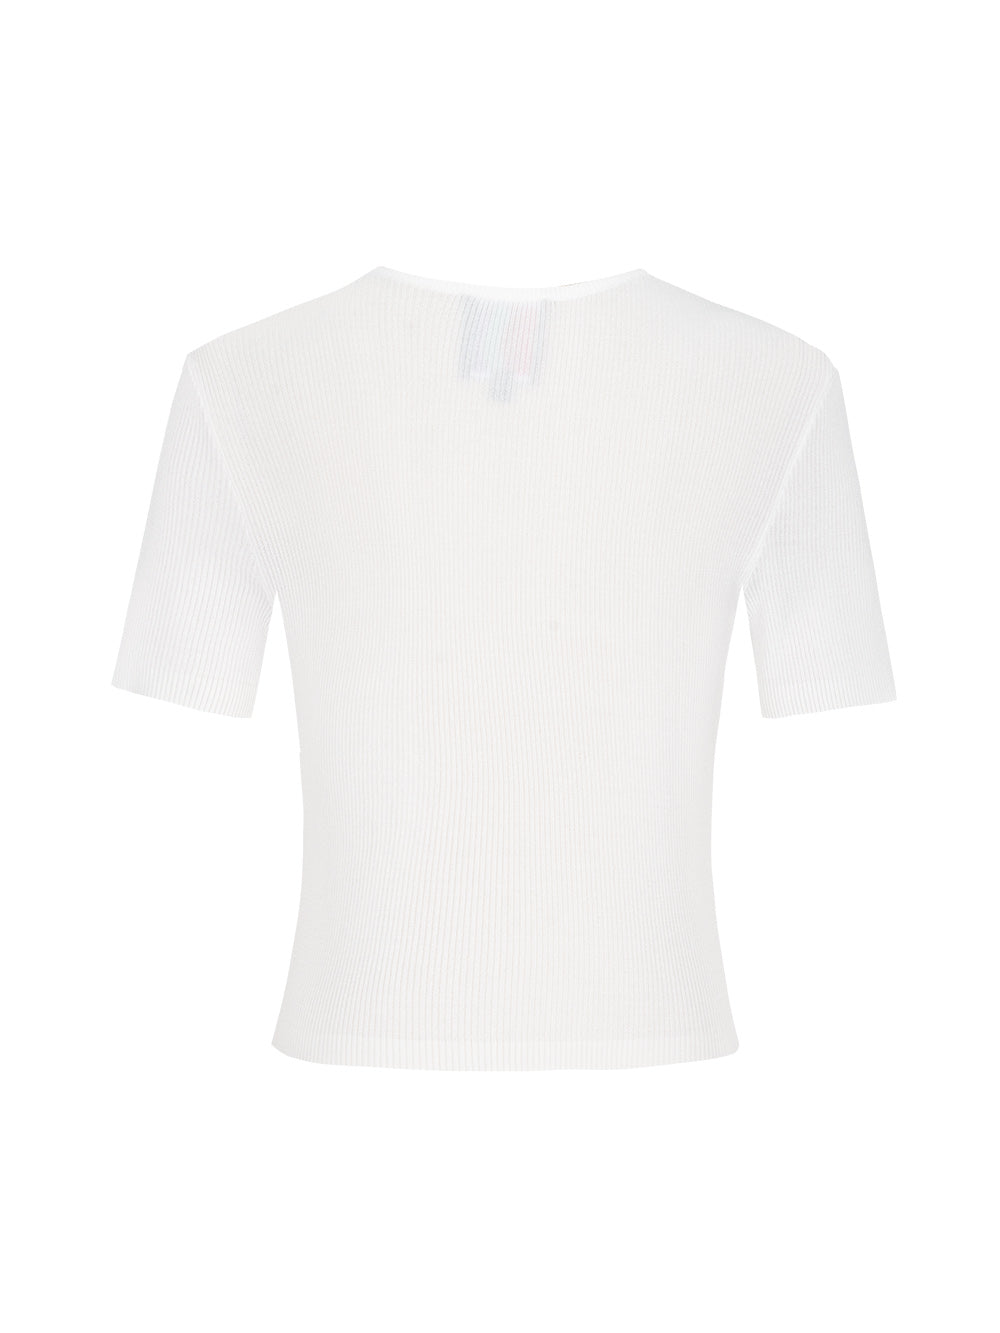 MUKZIN White Bottoming T-Shirt